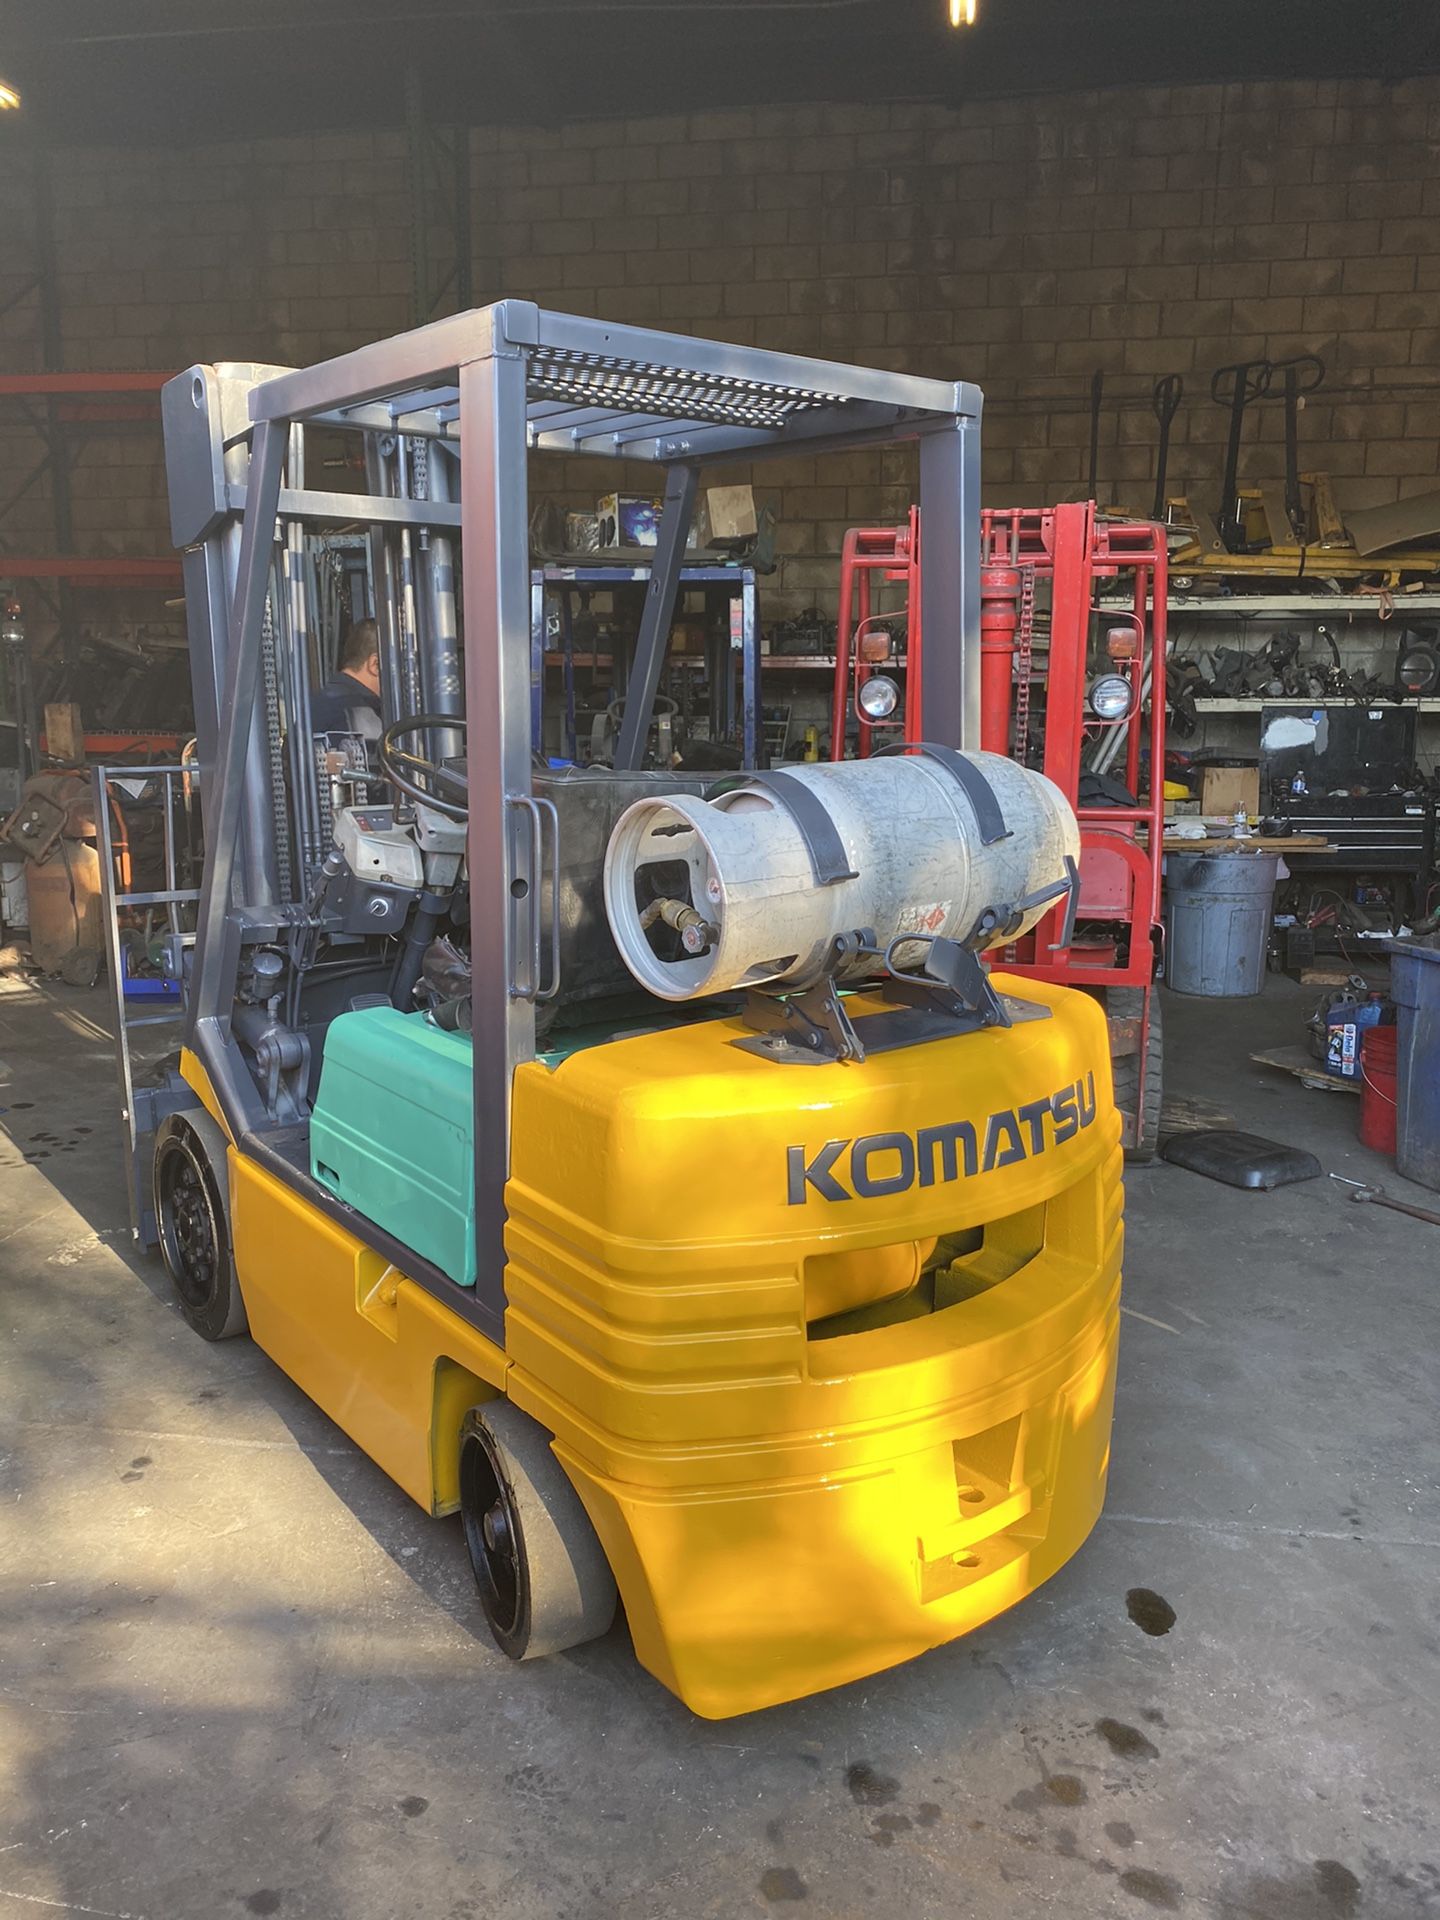 Komatsu Forklift 5000 Lbs